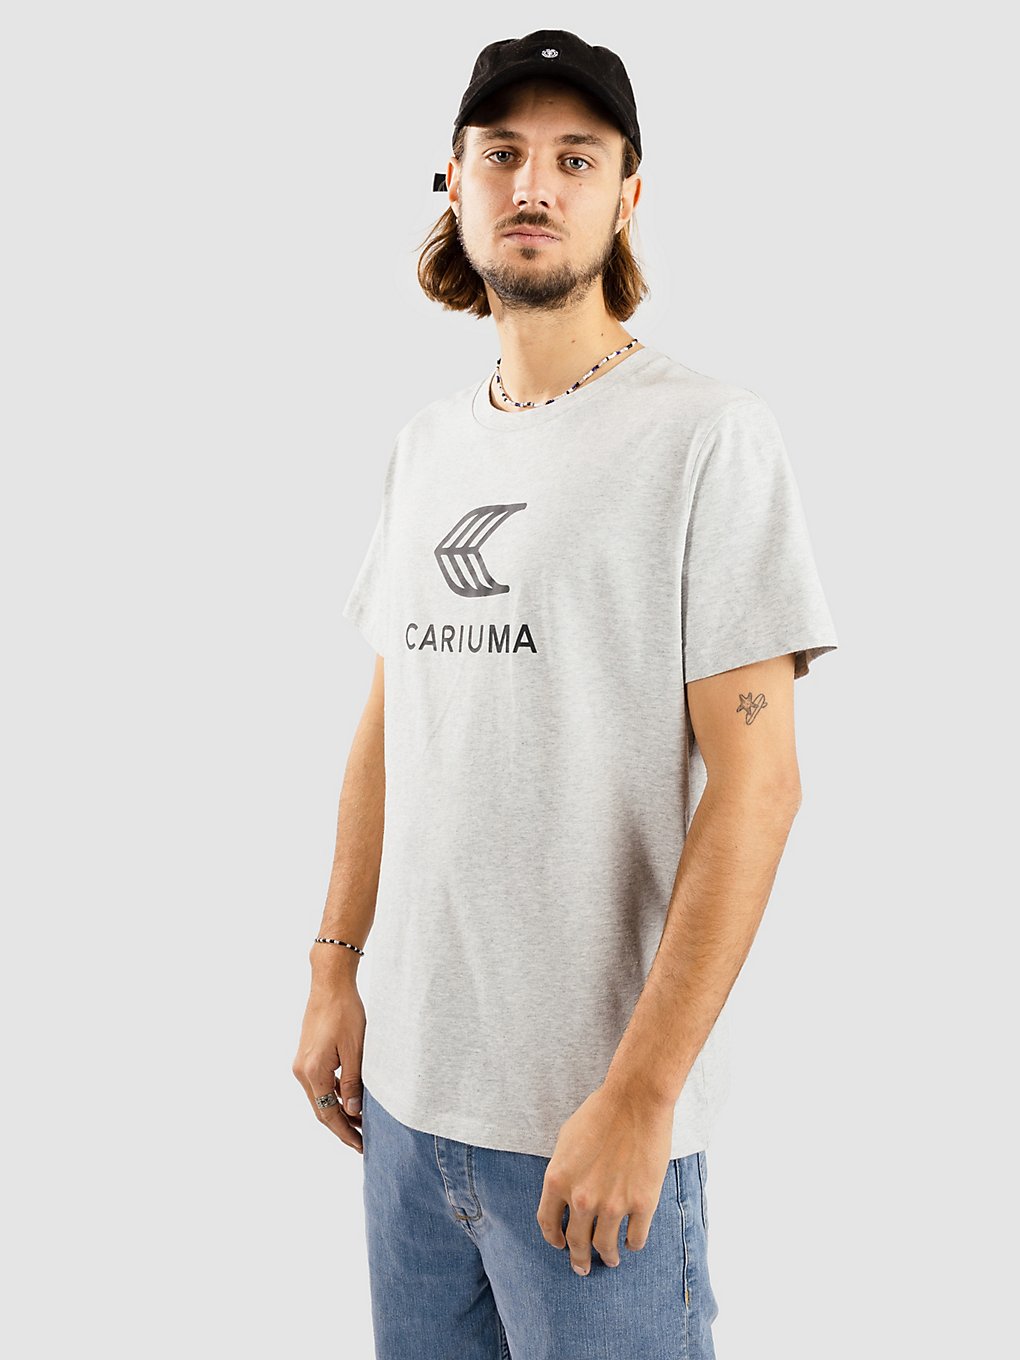 Cariuma Logo T-Shirt melange grey kaufen